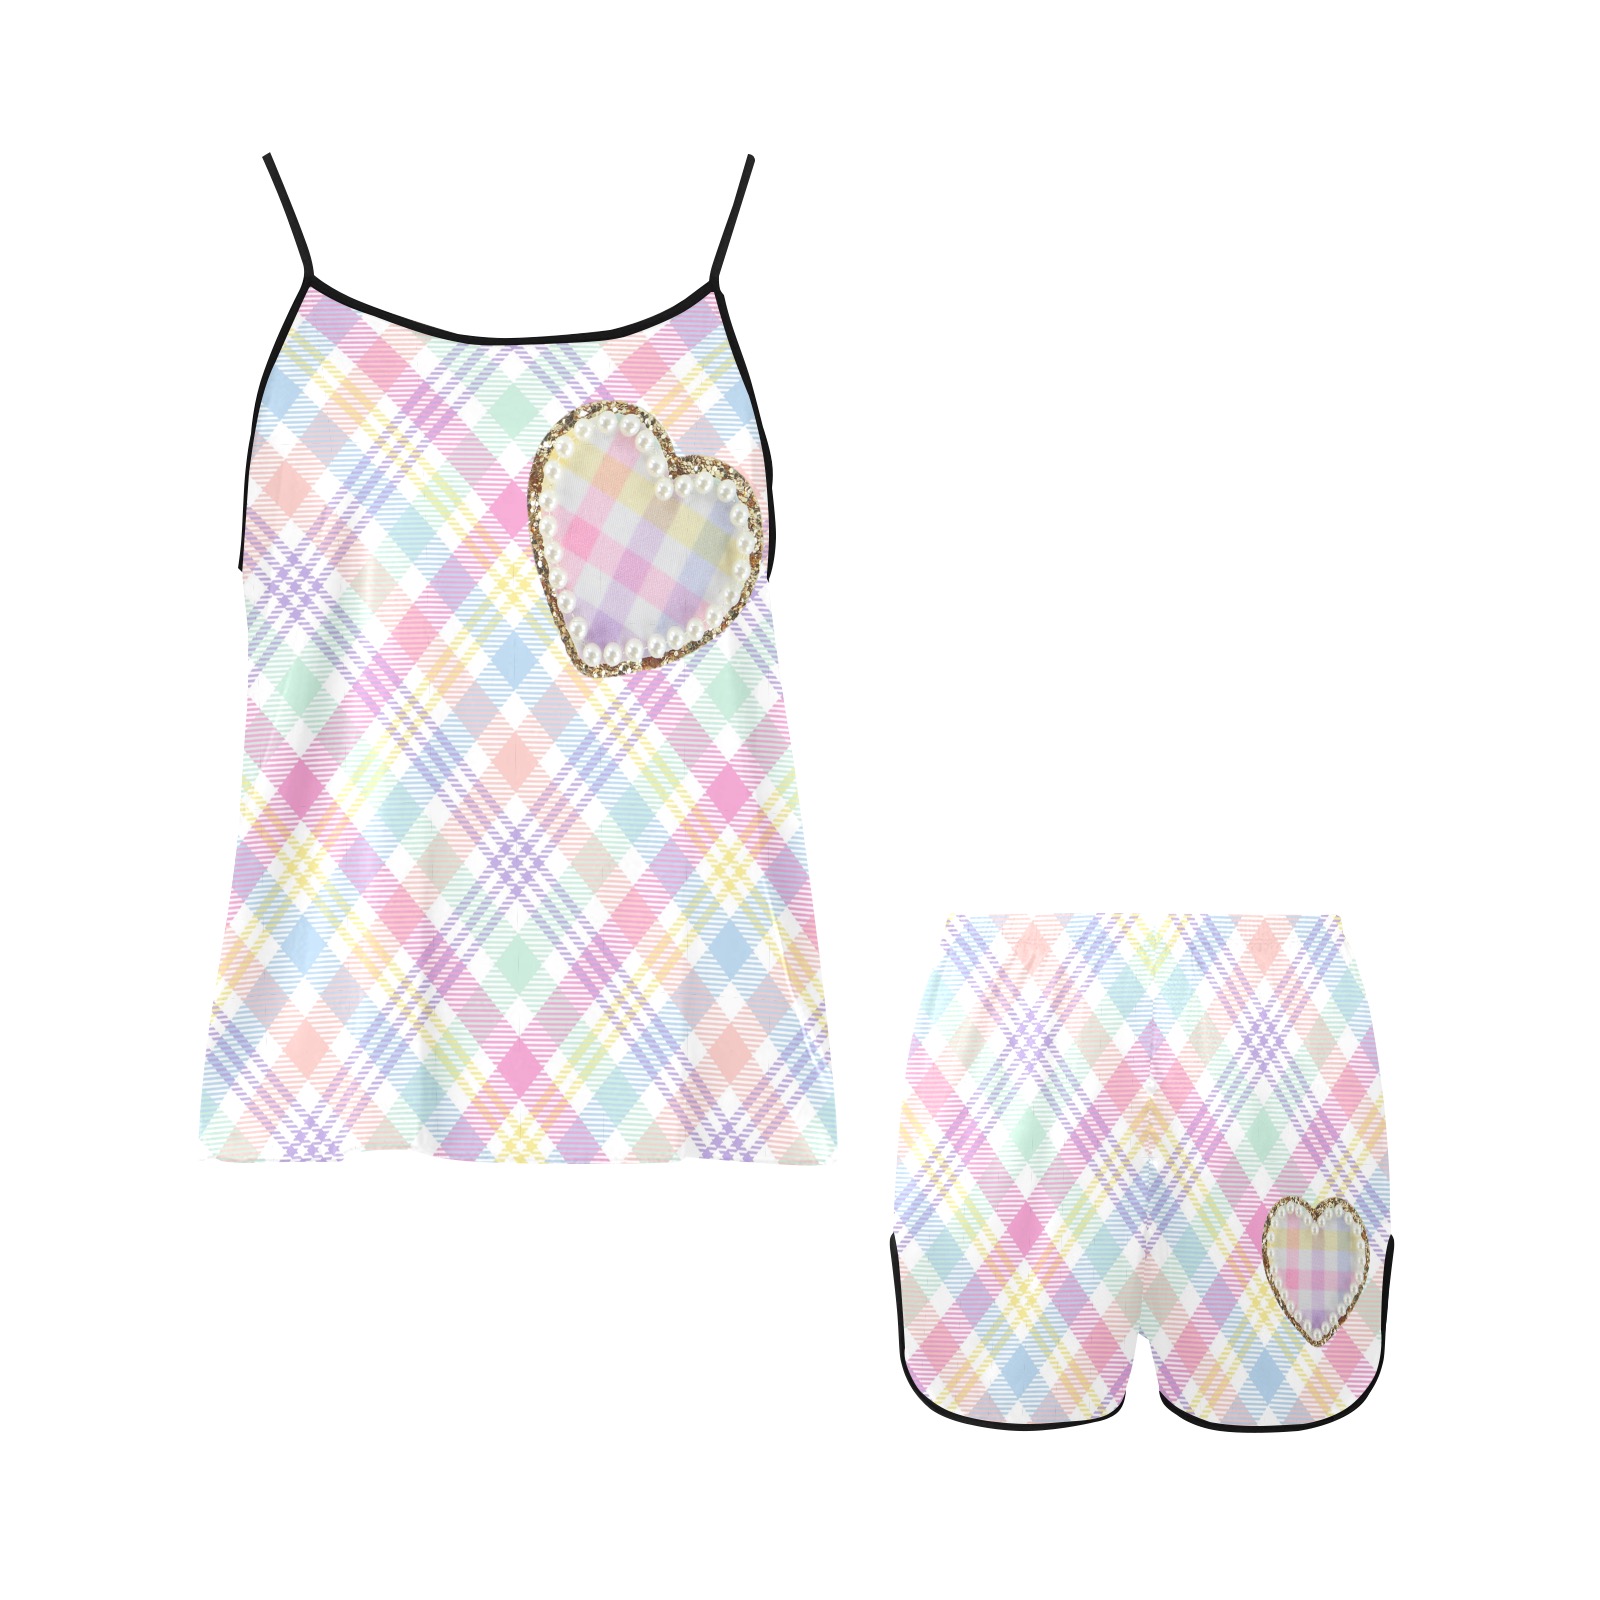 rainbowplaidpjs Women's Spaghetti Strap Short Pajama Set